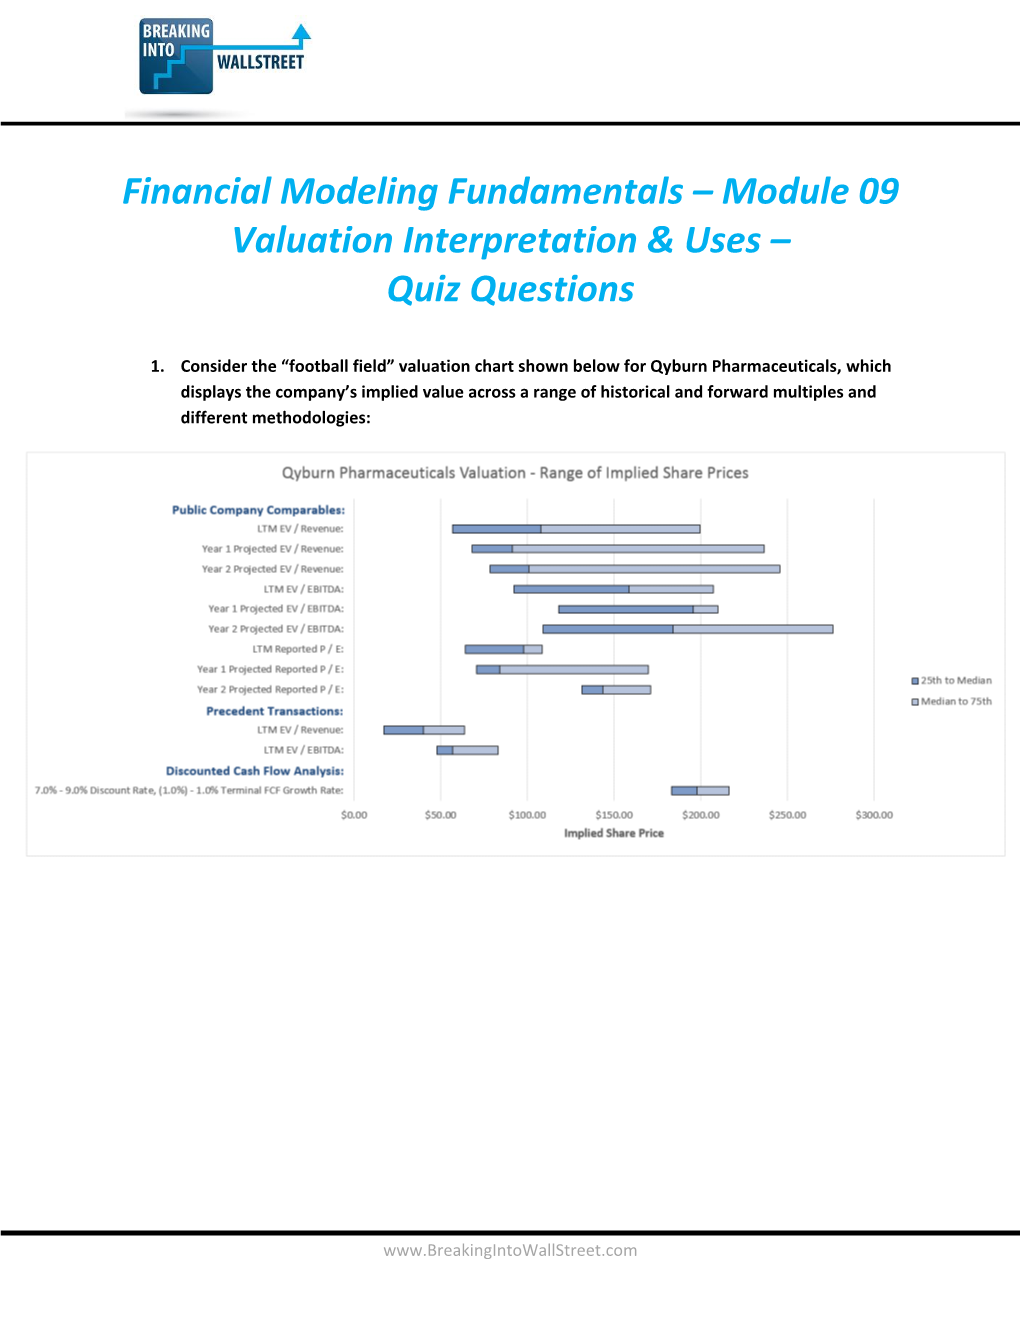 Financial Modeling Fundamentals – Module 09 Valuation Interpretation & Uses – Quiz Questions